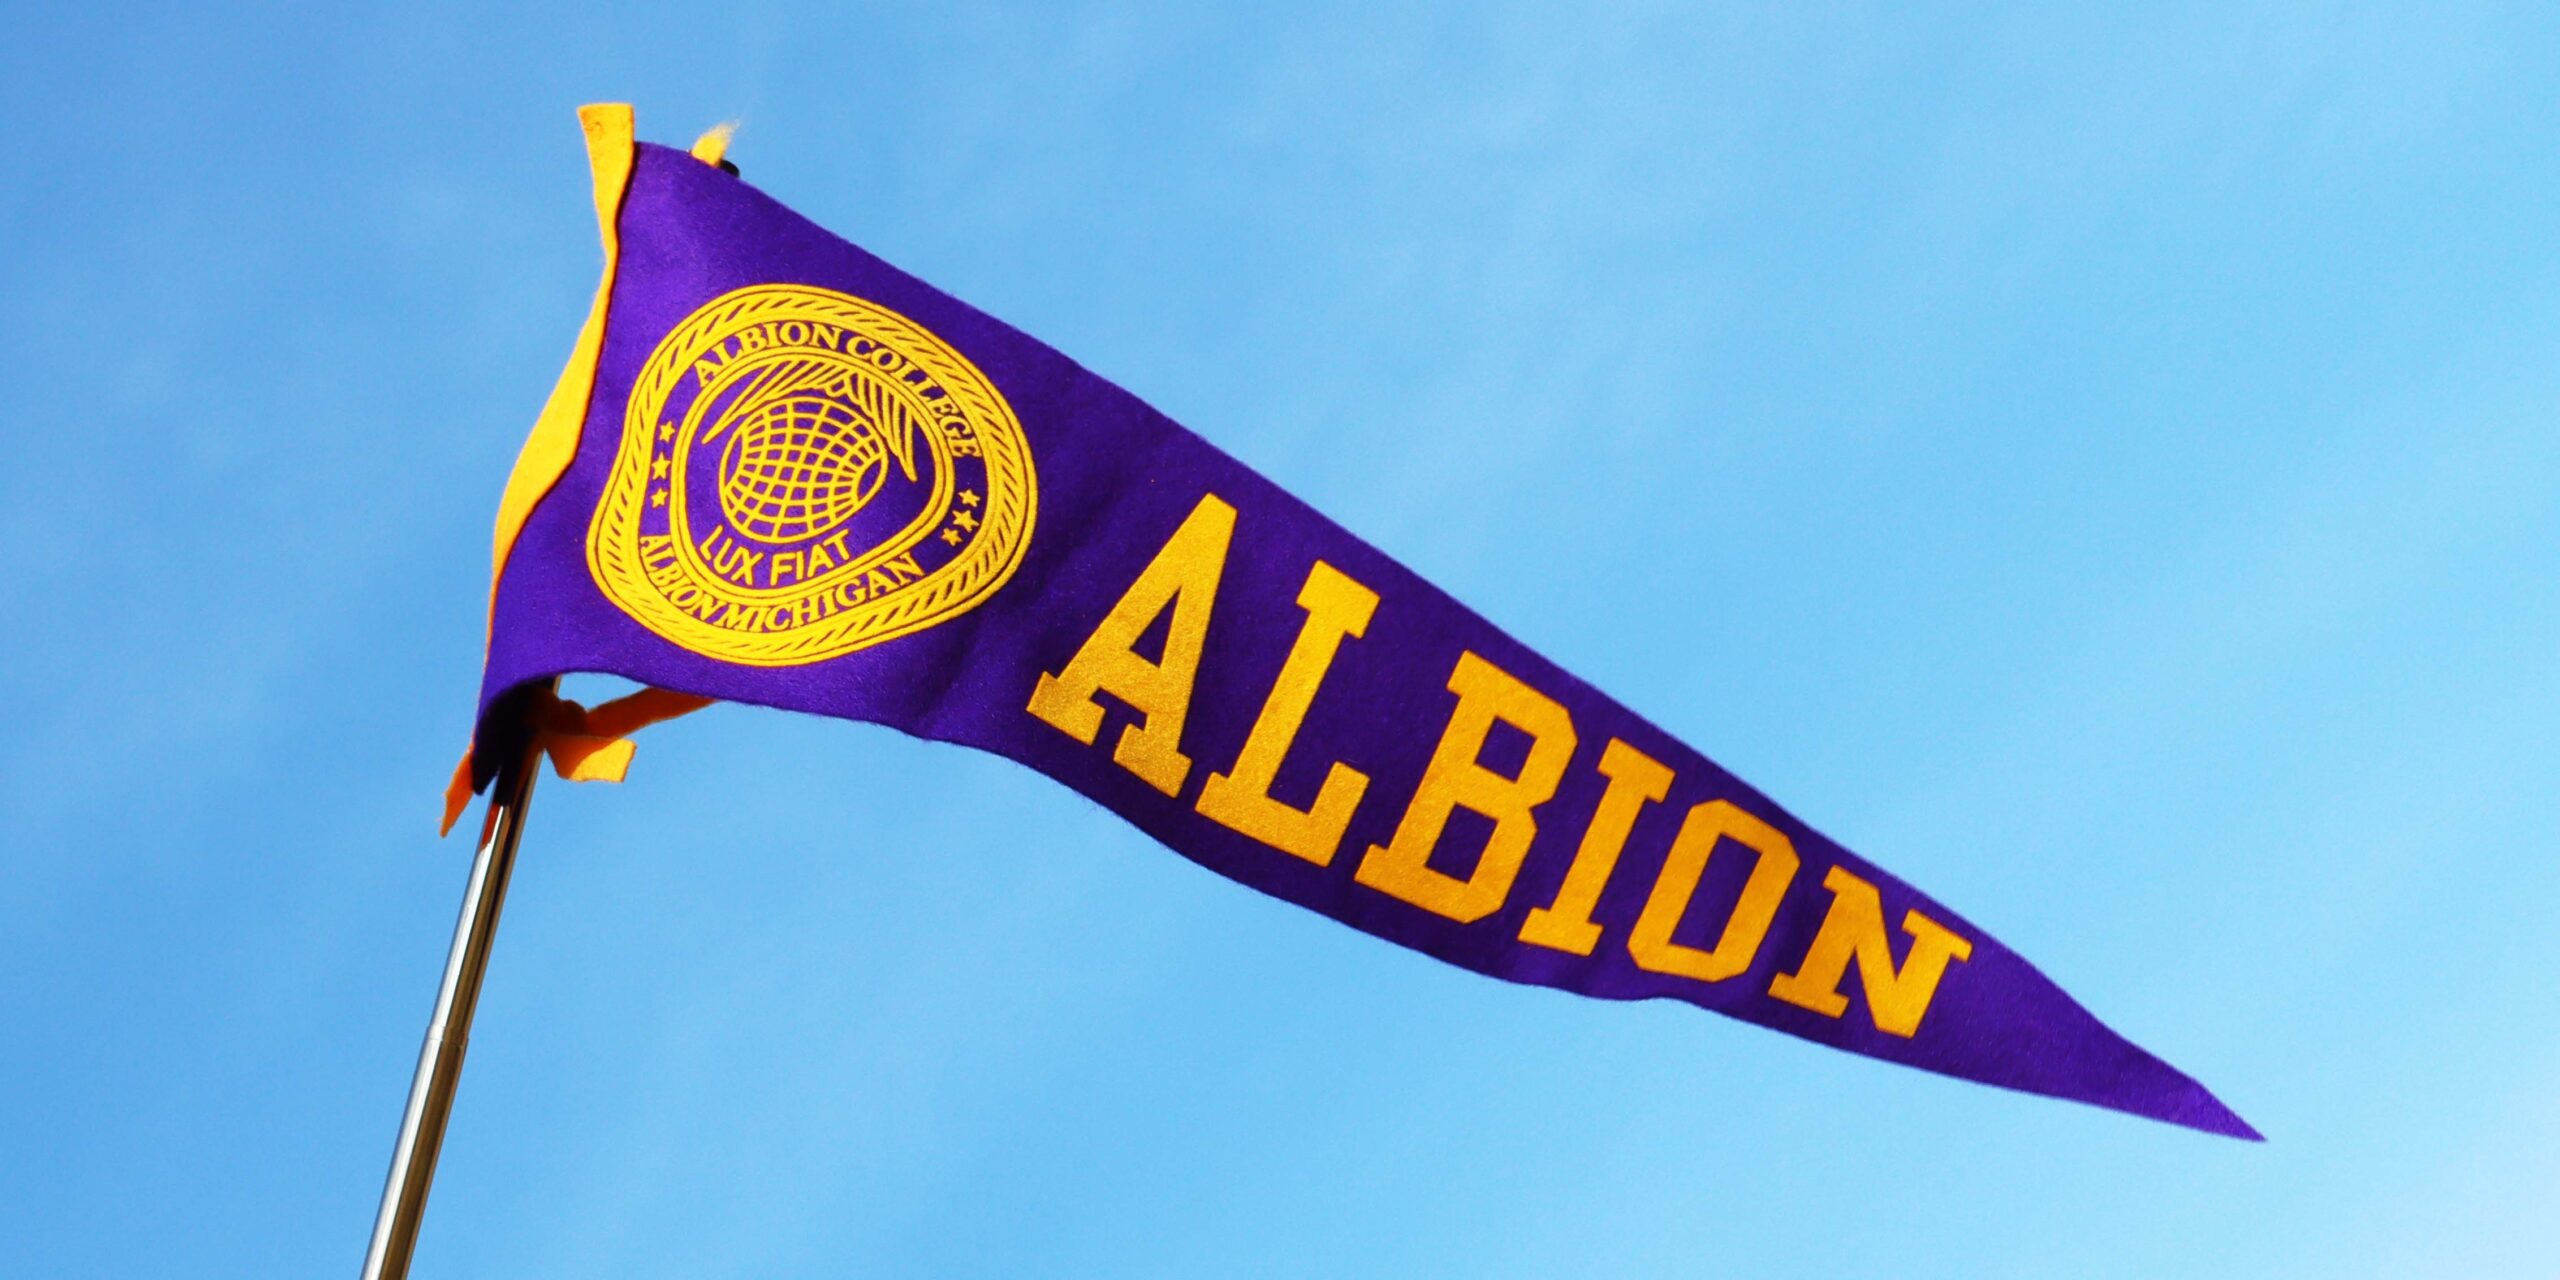 Purple Albion pennant against a blue sky backdrop.